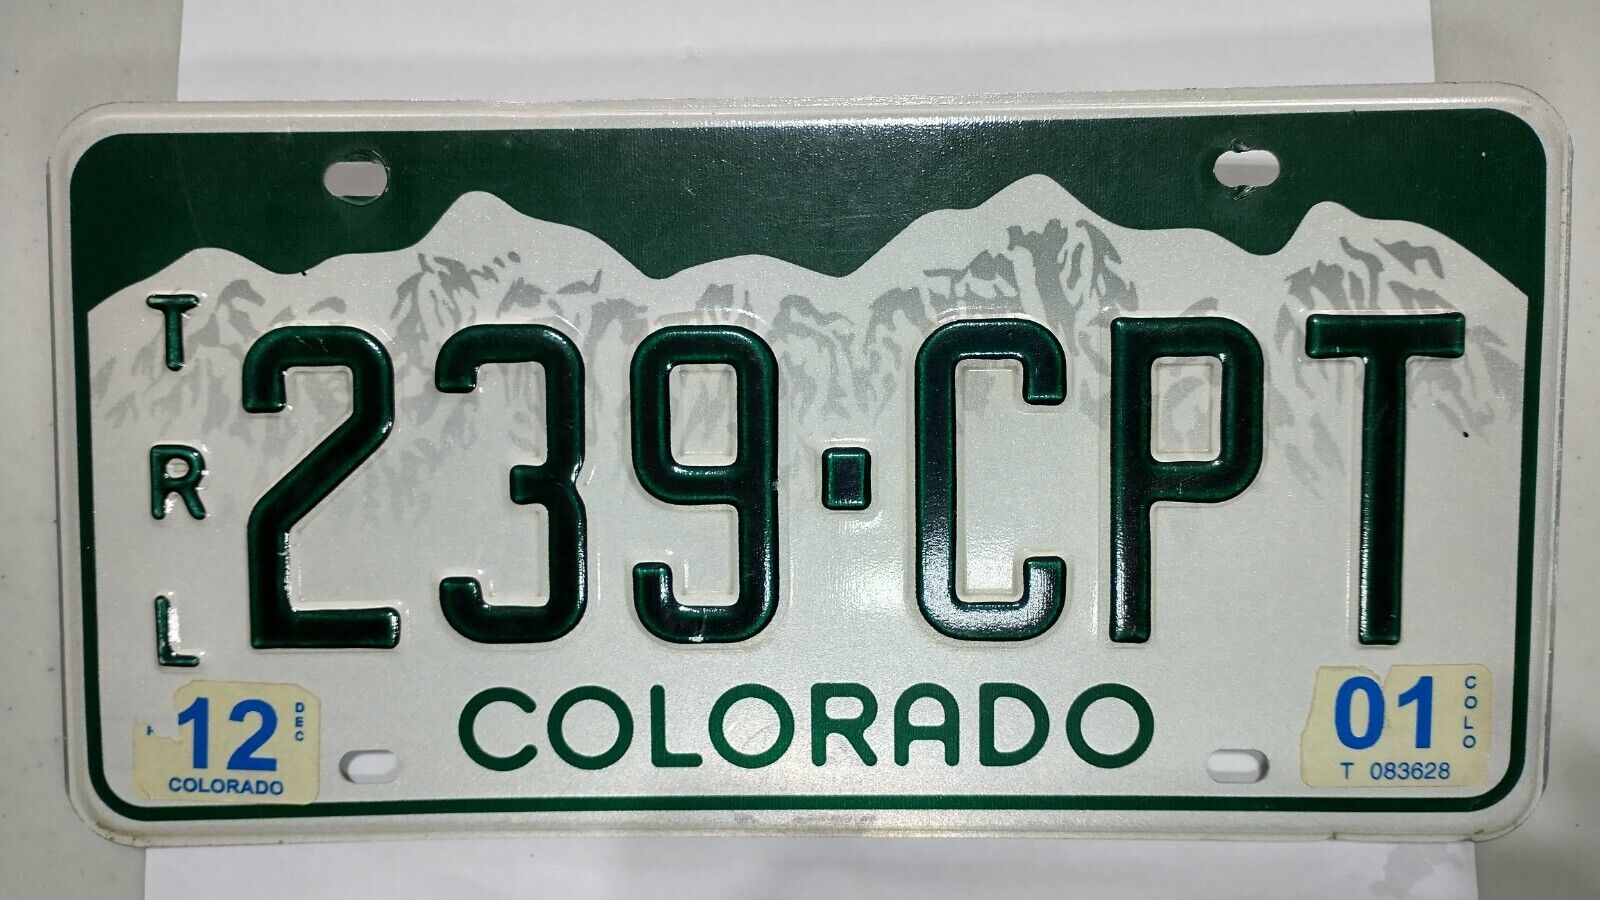 License Plate Colorado Trailer 239•cpt